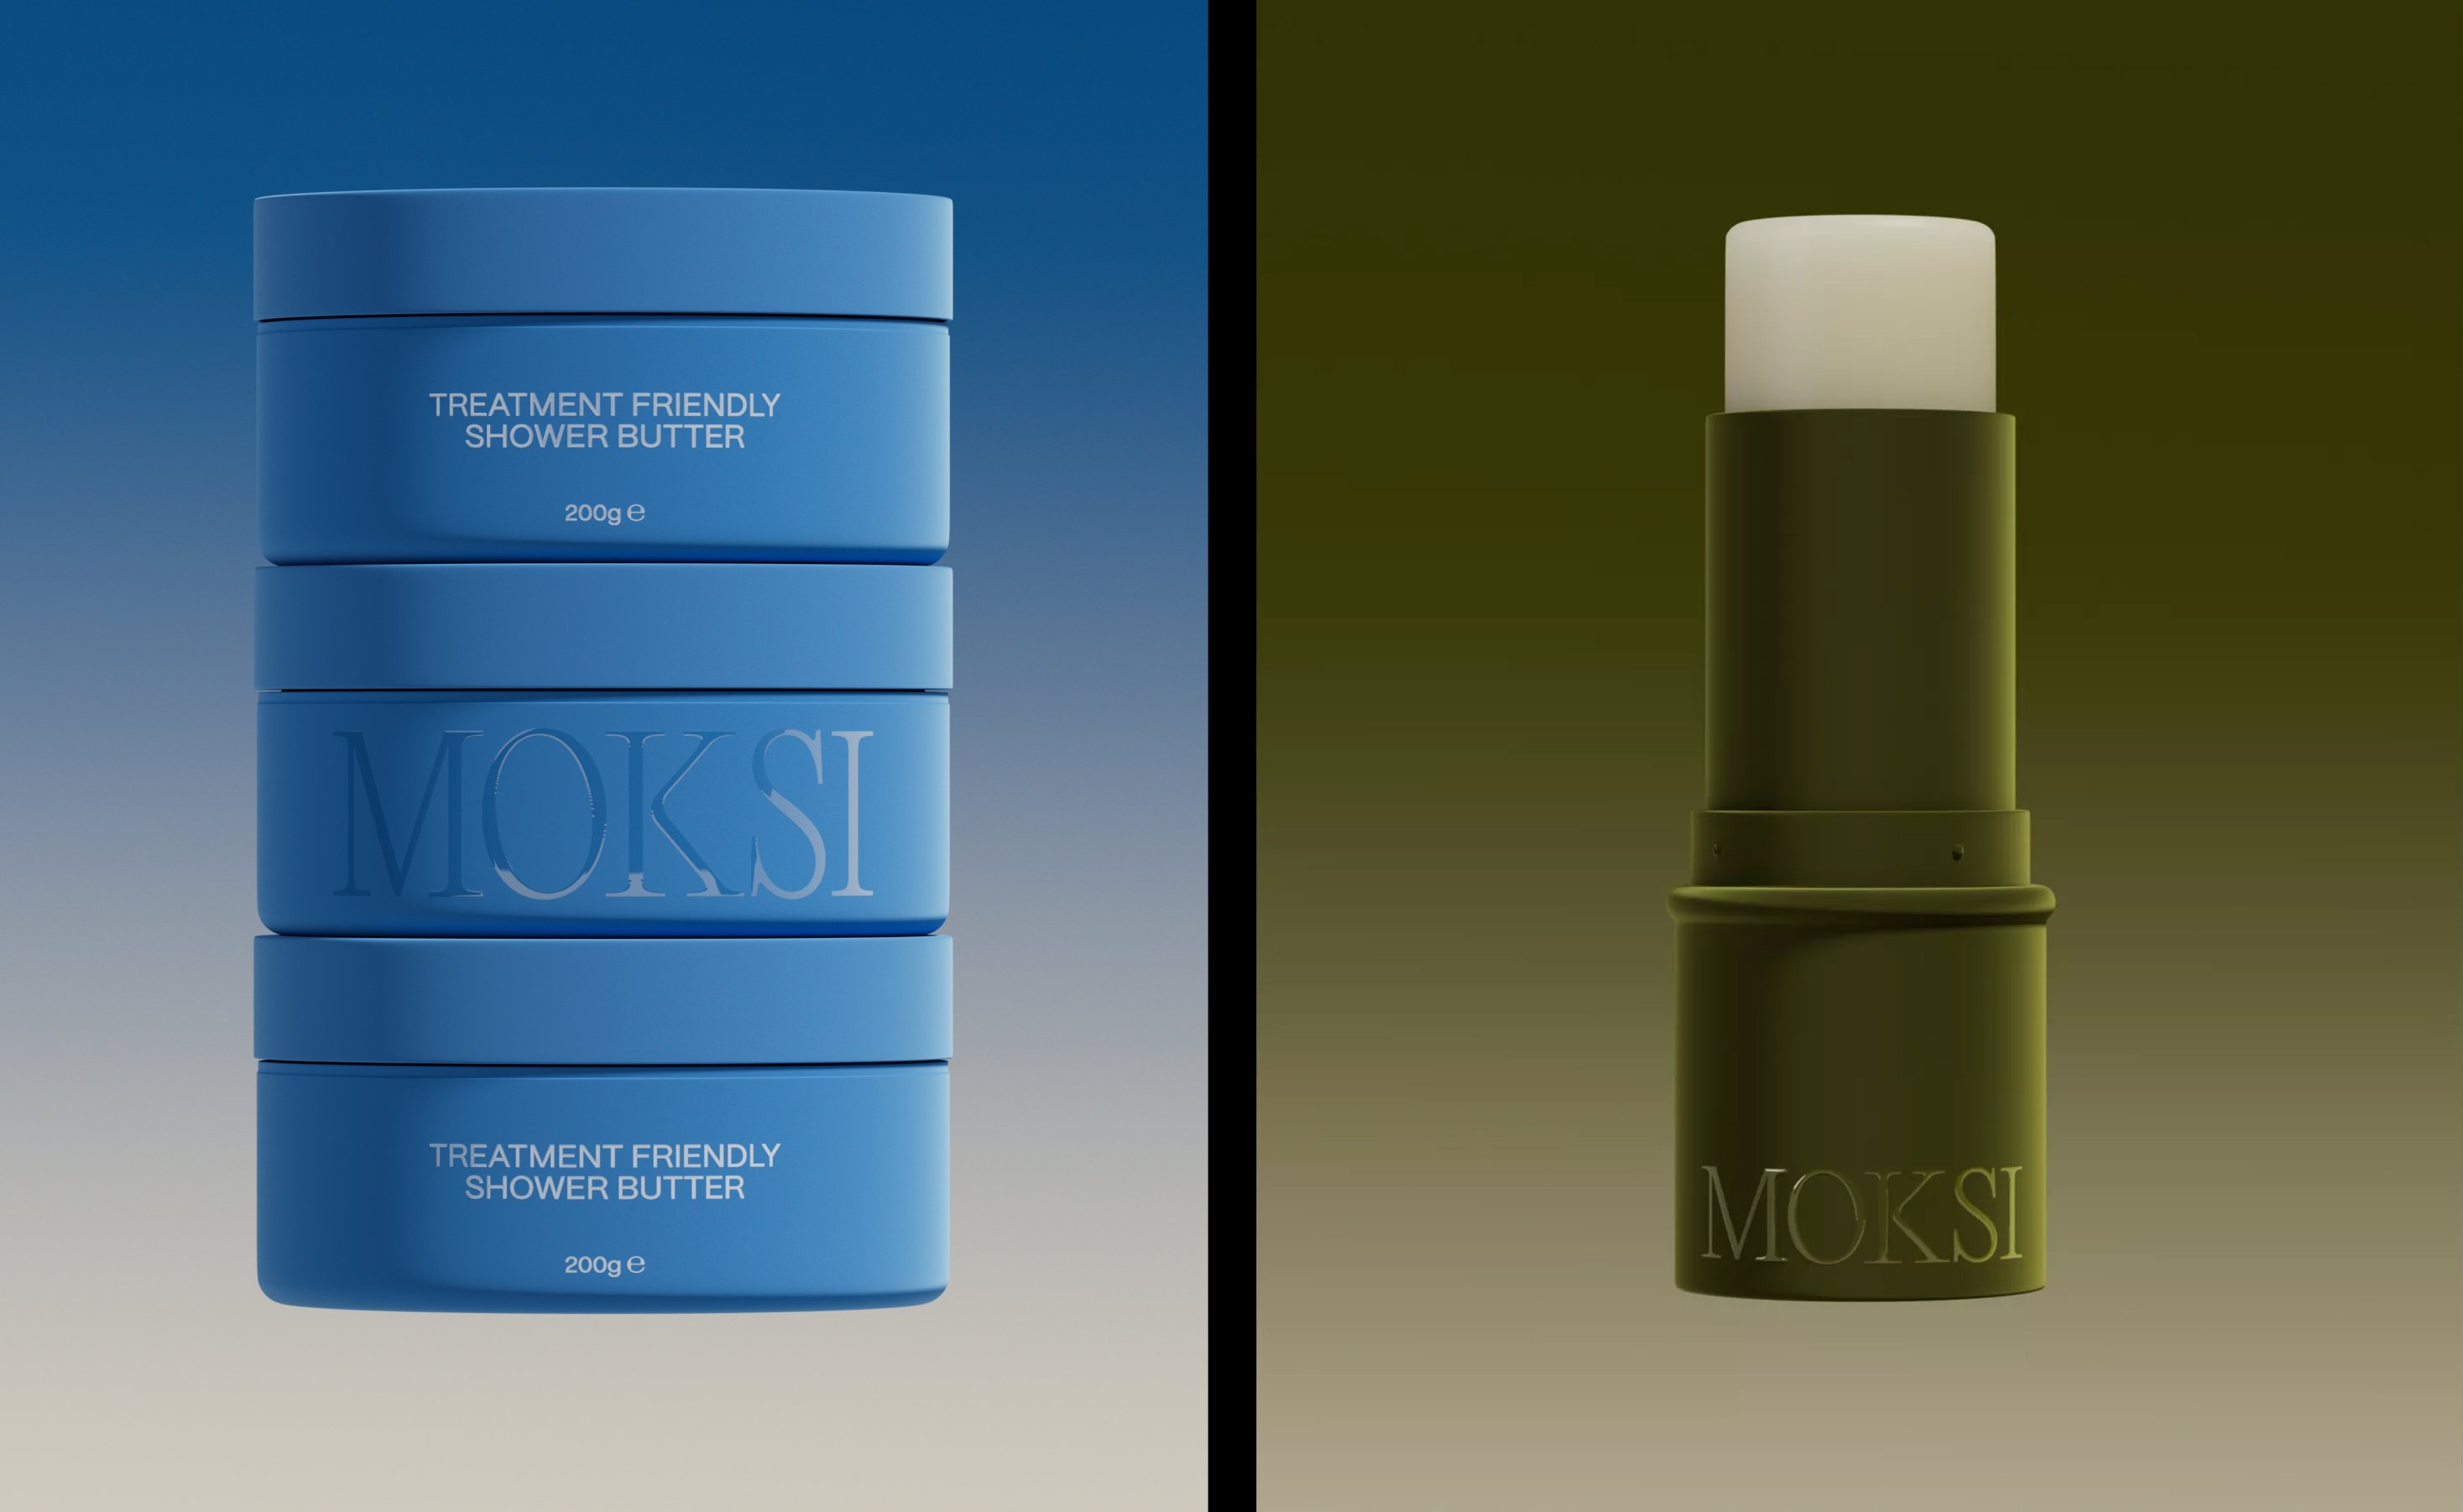 New logo, packaging and website design for pre and post cancer skincare range Moksi designed by Netherlands-based FCKLCK Studio